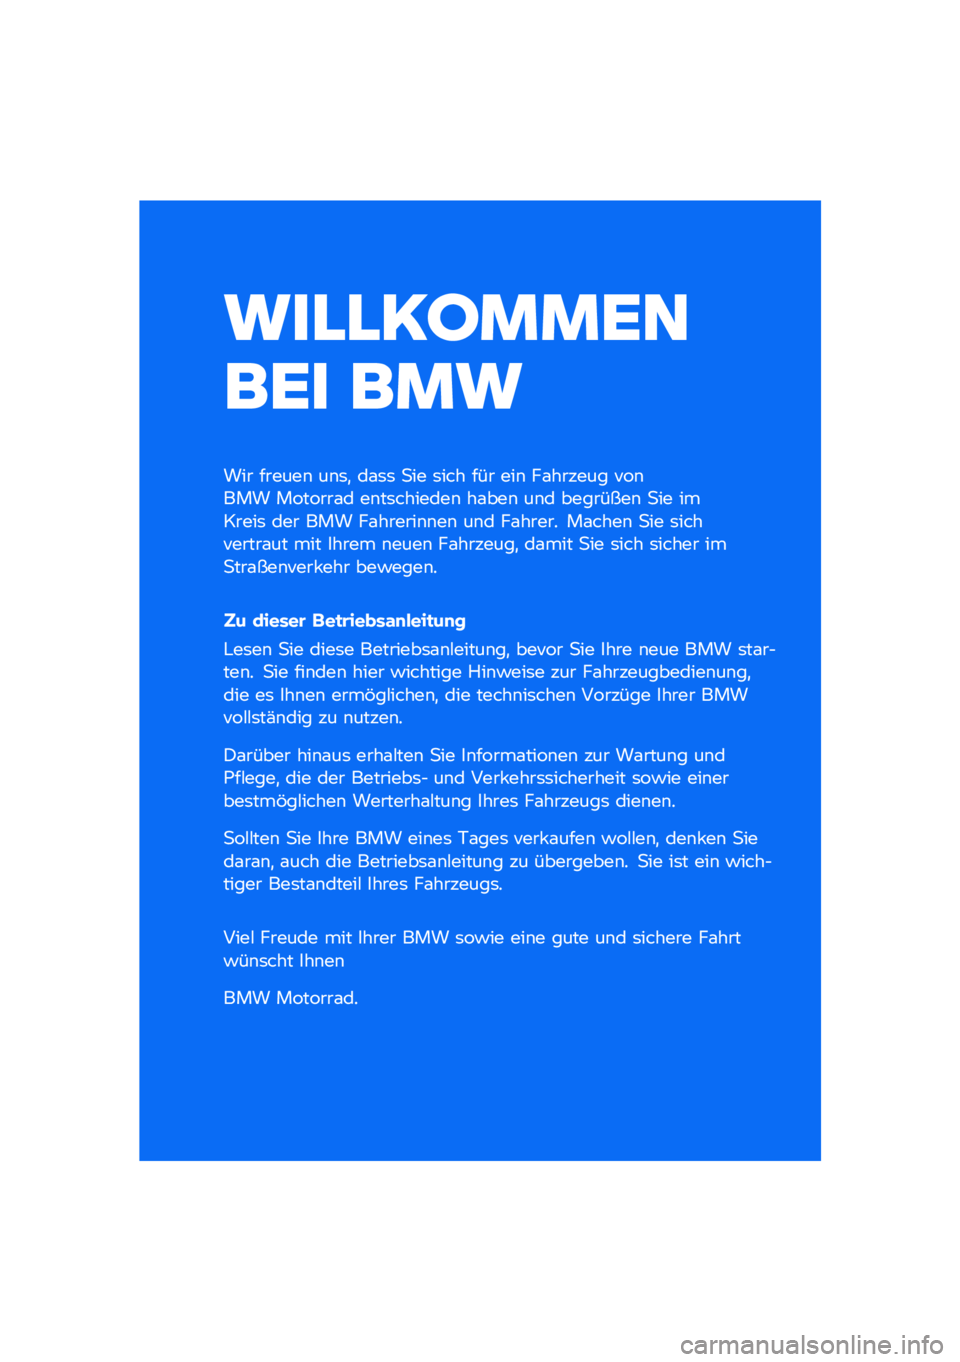 BMW MOTORRAD F 750 GS 2020  Betriebsanleitung (in German) ���������\b�	
�
�\b� �
��
��� ������\b ��\b�	�
 ��\f�	�	 �
�� �	��� ��� ���\b ��\f������ ���\b��� �������\f� ��\b��	�������\b ��\f���\b ��